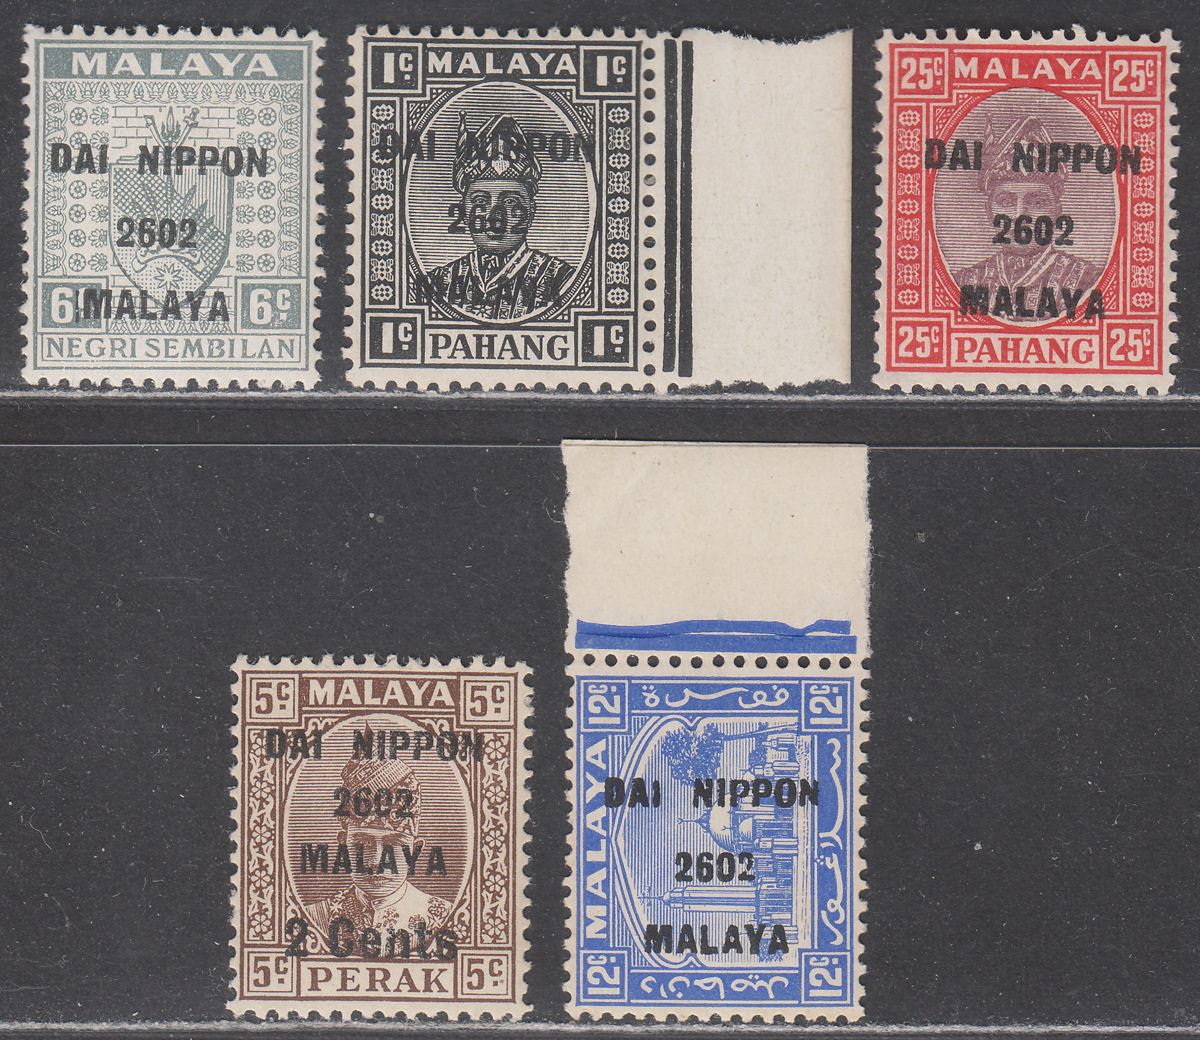 Malaya Japanese Occupation 1942 DAI NIPPON 2602 Overprint Selection to 25c Mint